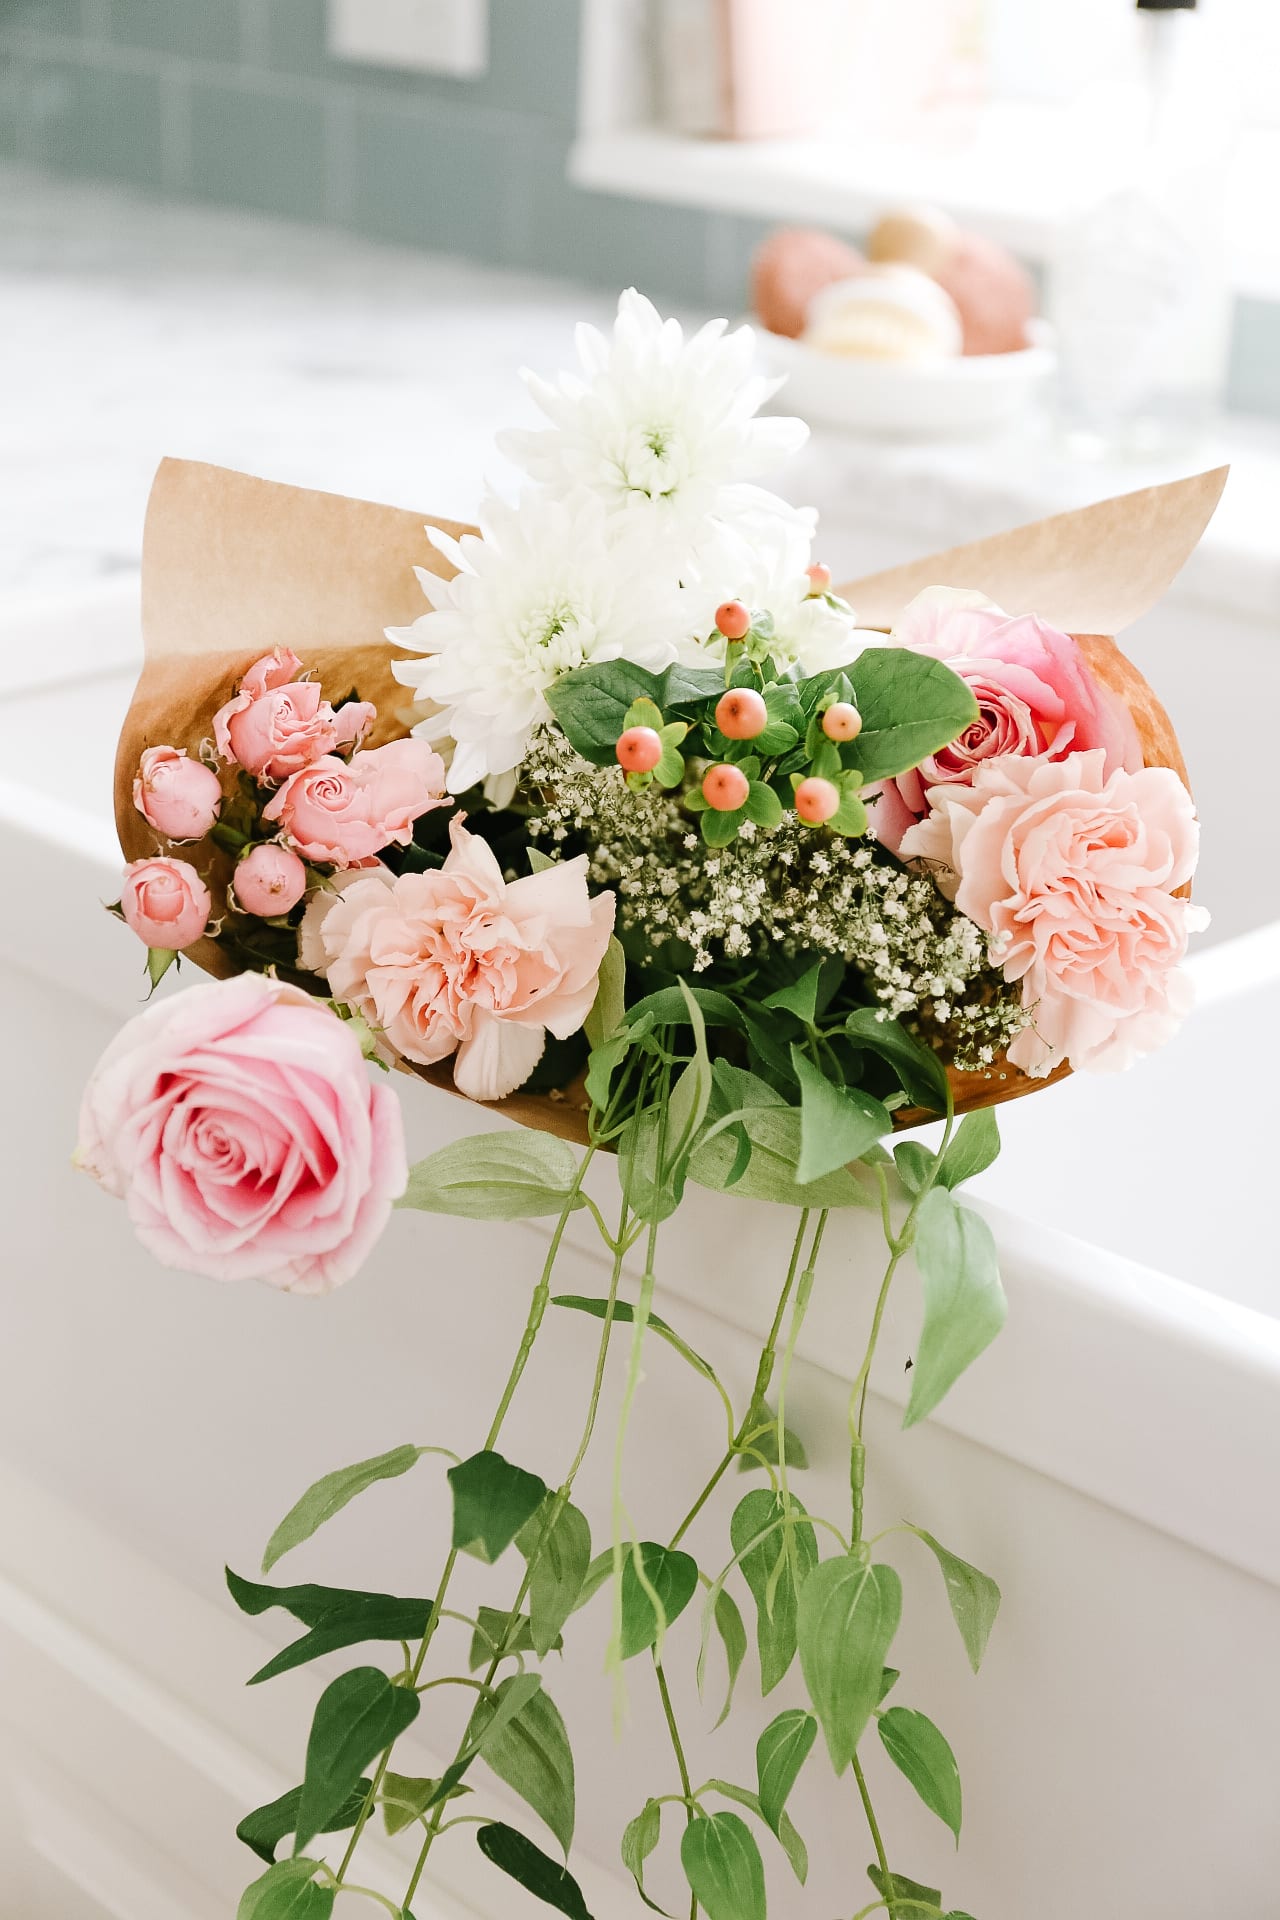 A bouquet of flowers in a sink